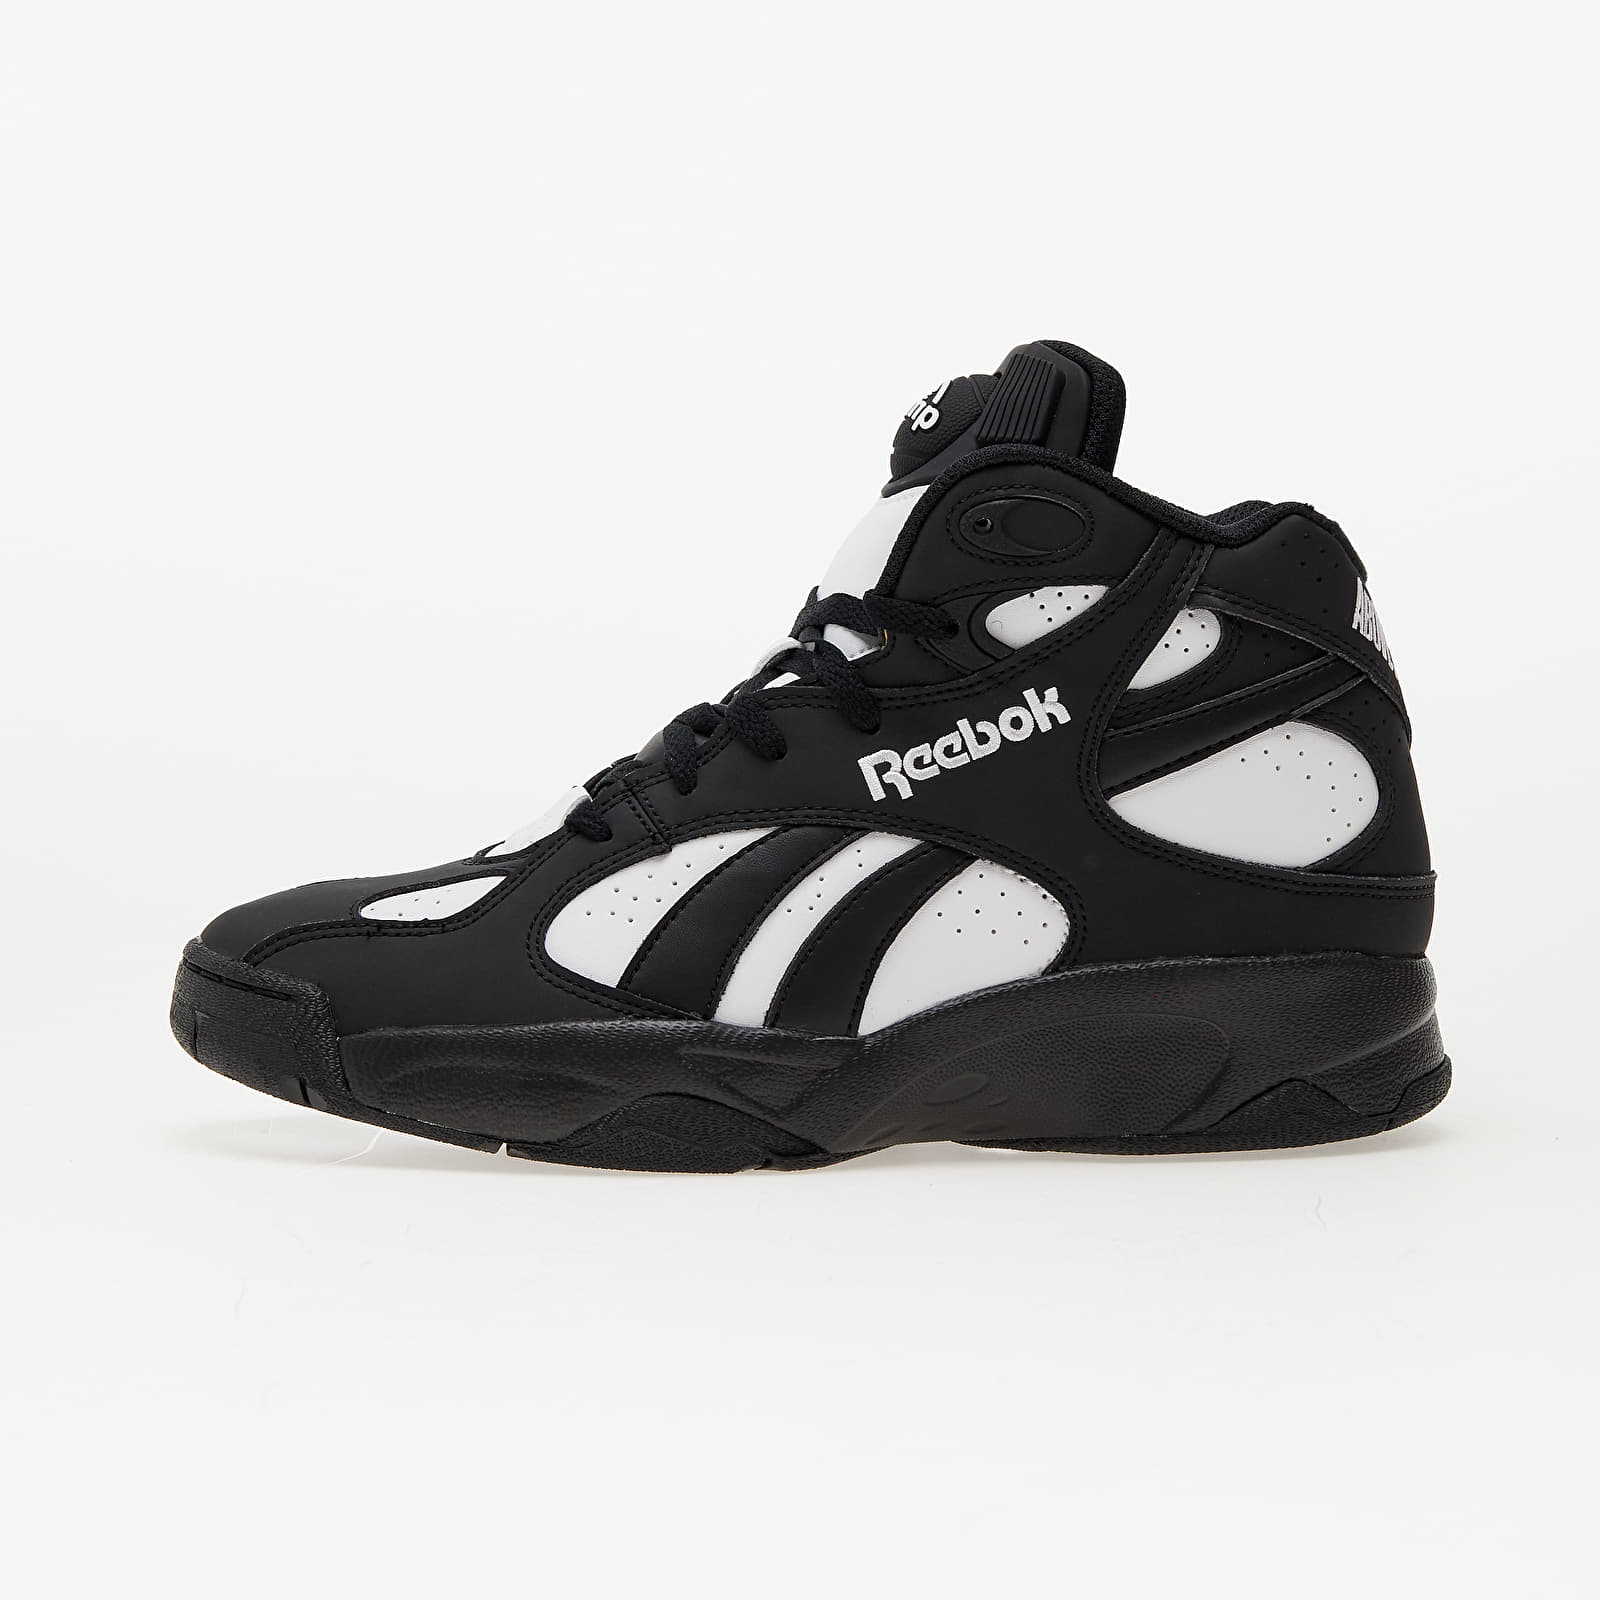 Men's shoes Reebok Atr Pump Vertical Core Black/ Ftw White/ Core Black